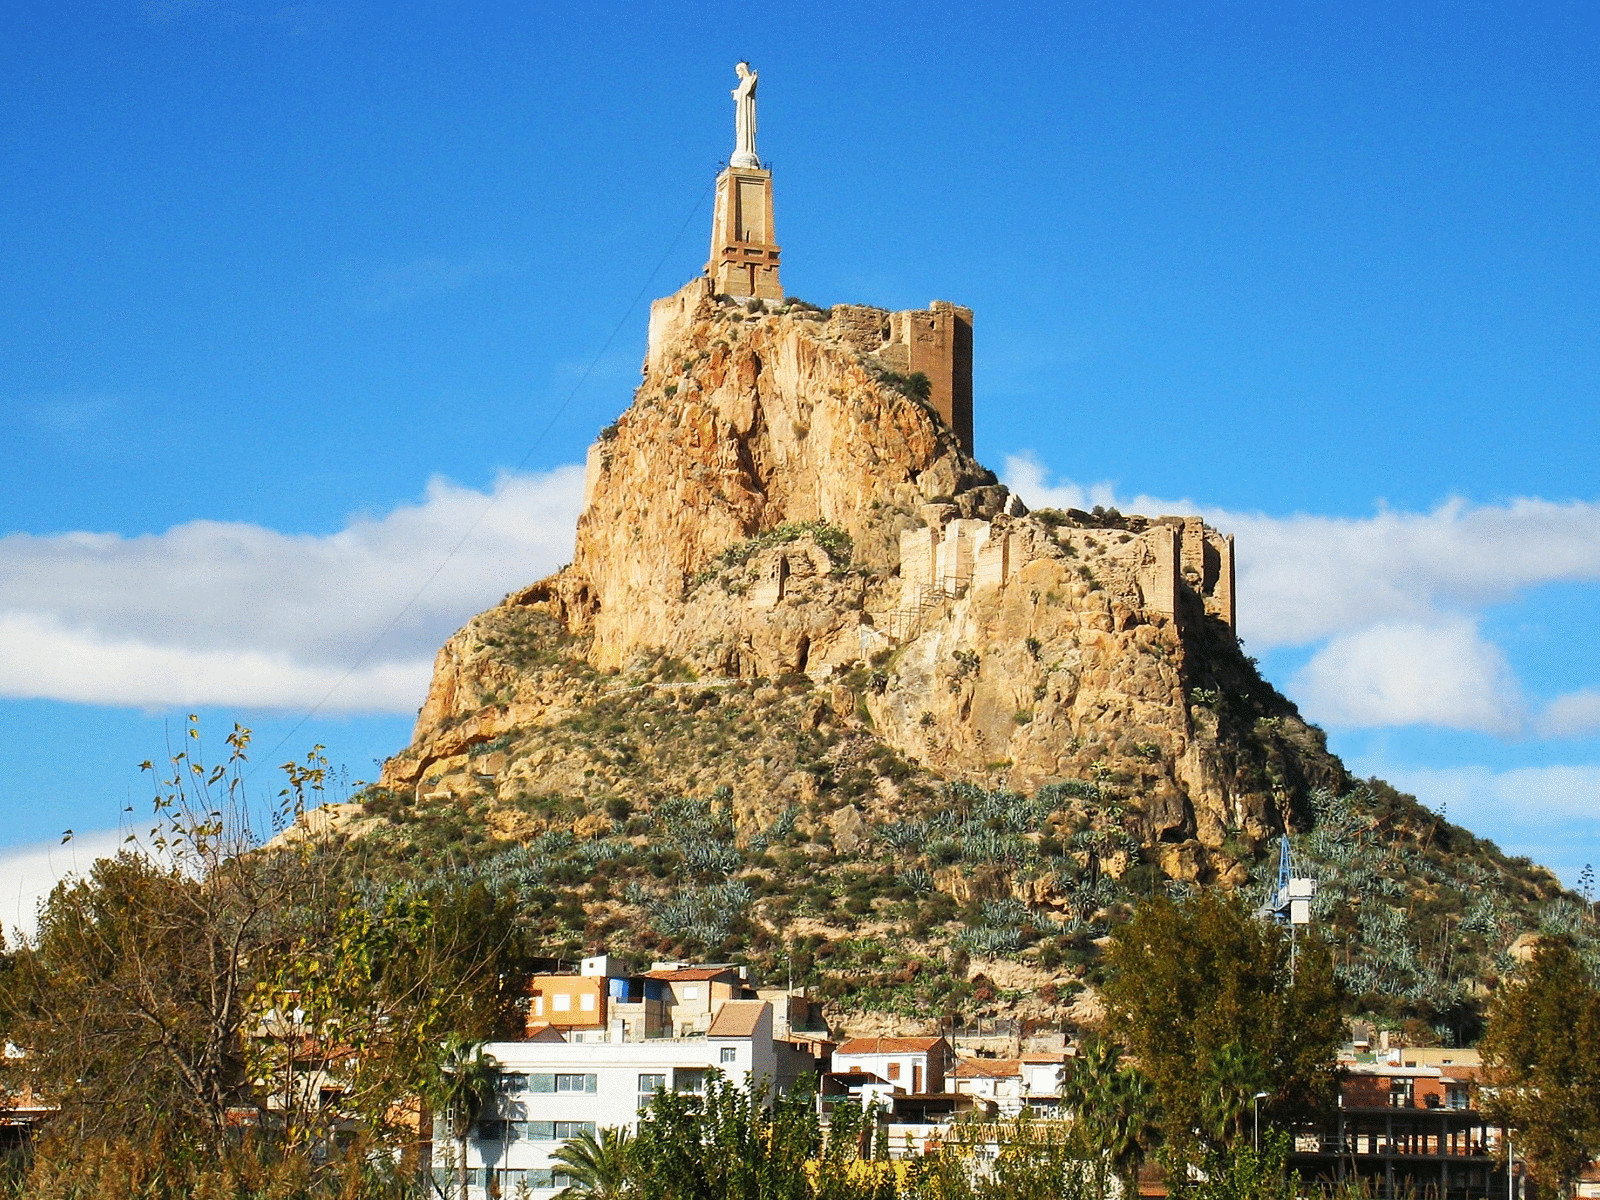  Замок Монтеагудо - охранник Испании